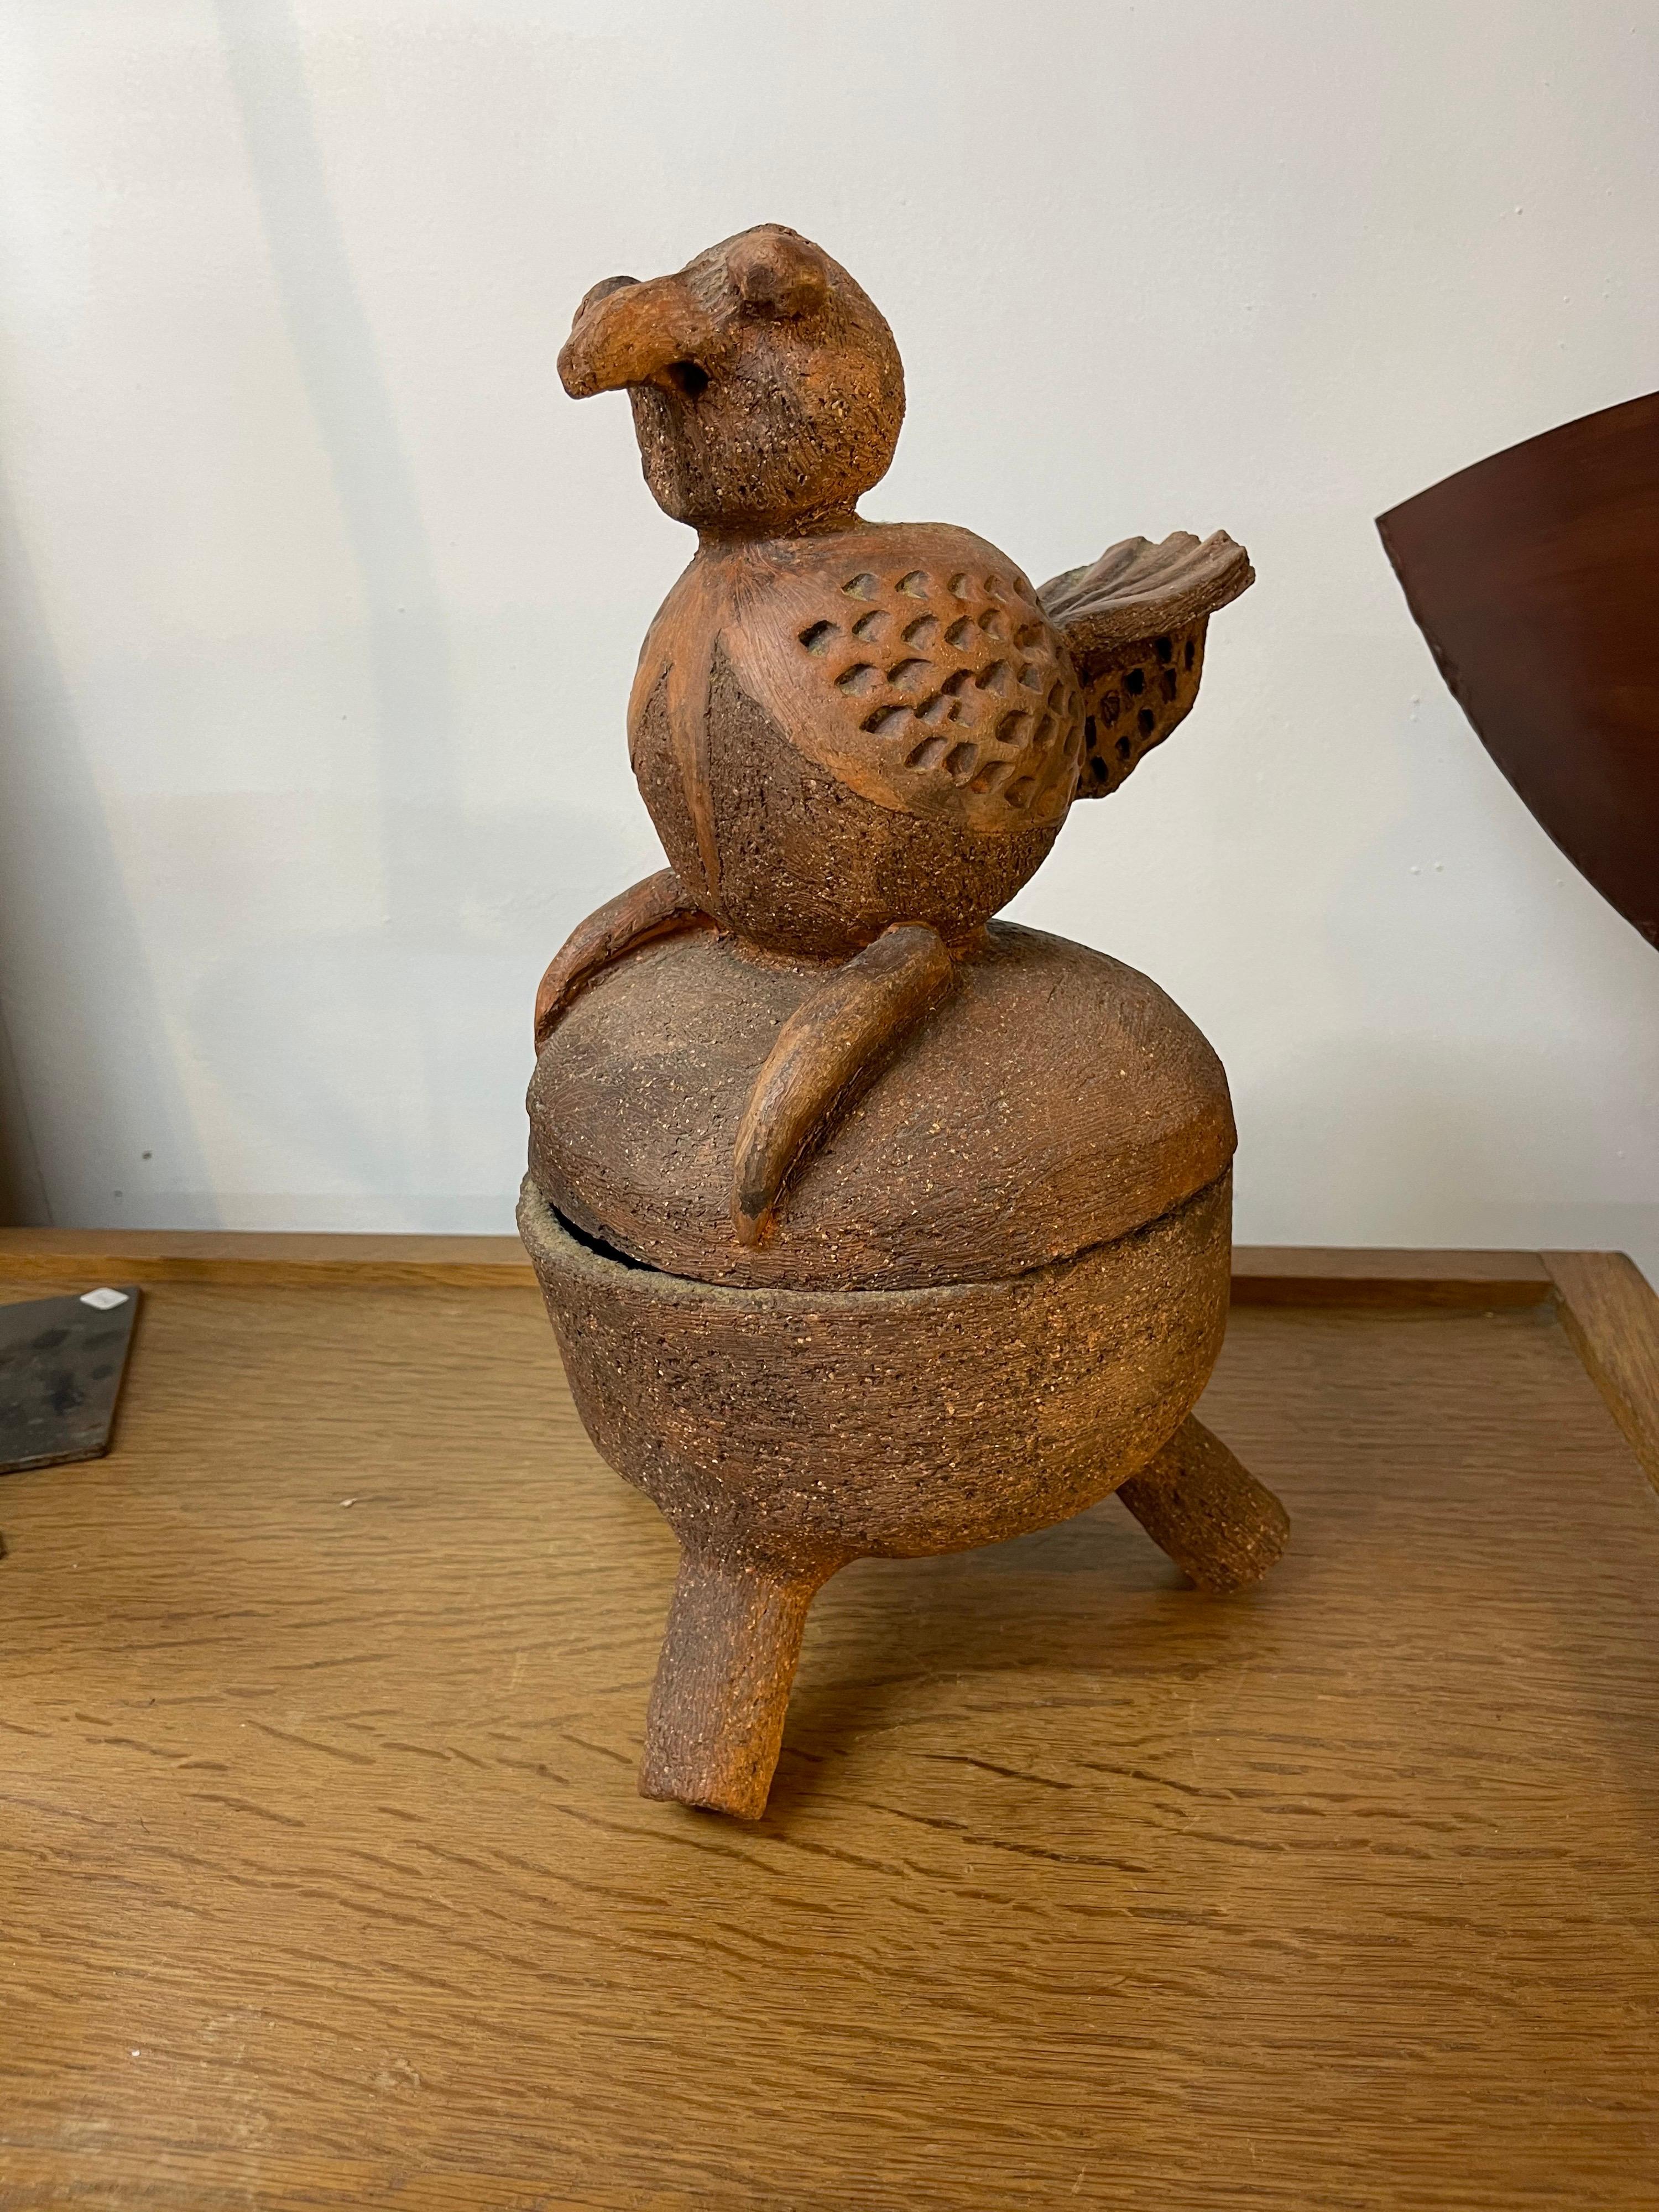 An unusual terracotta ceramic bird by Louis Delorme born in 1934.